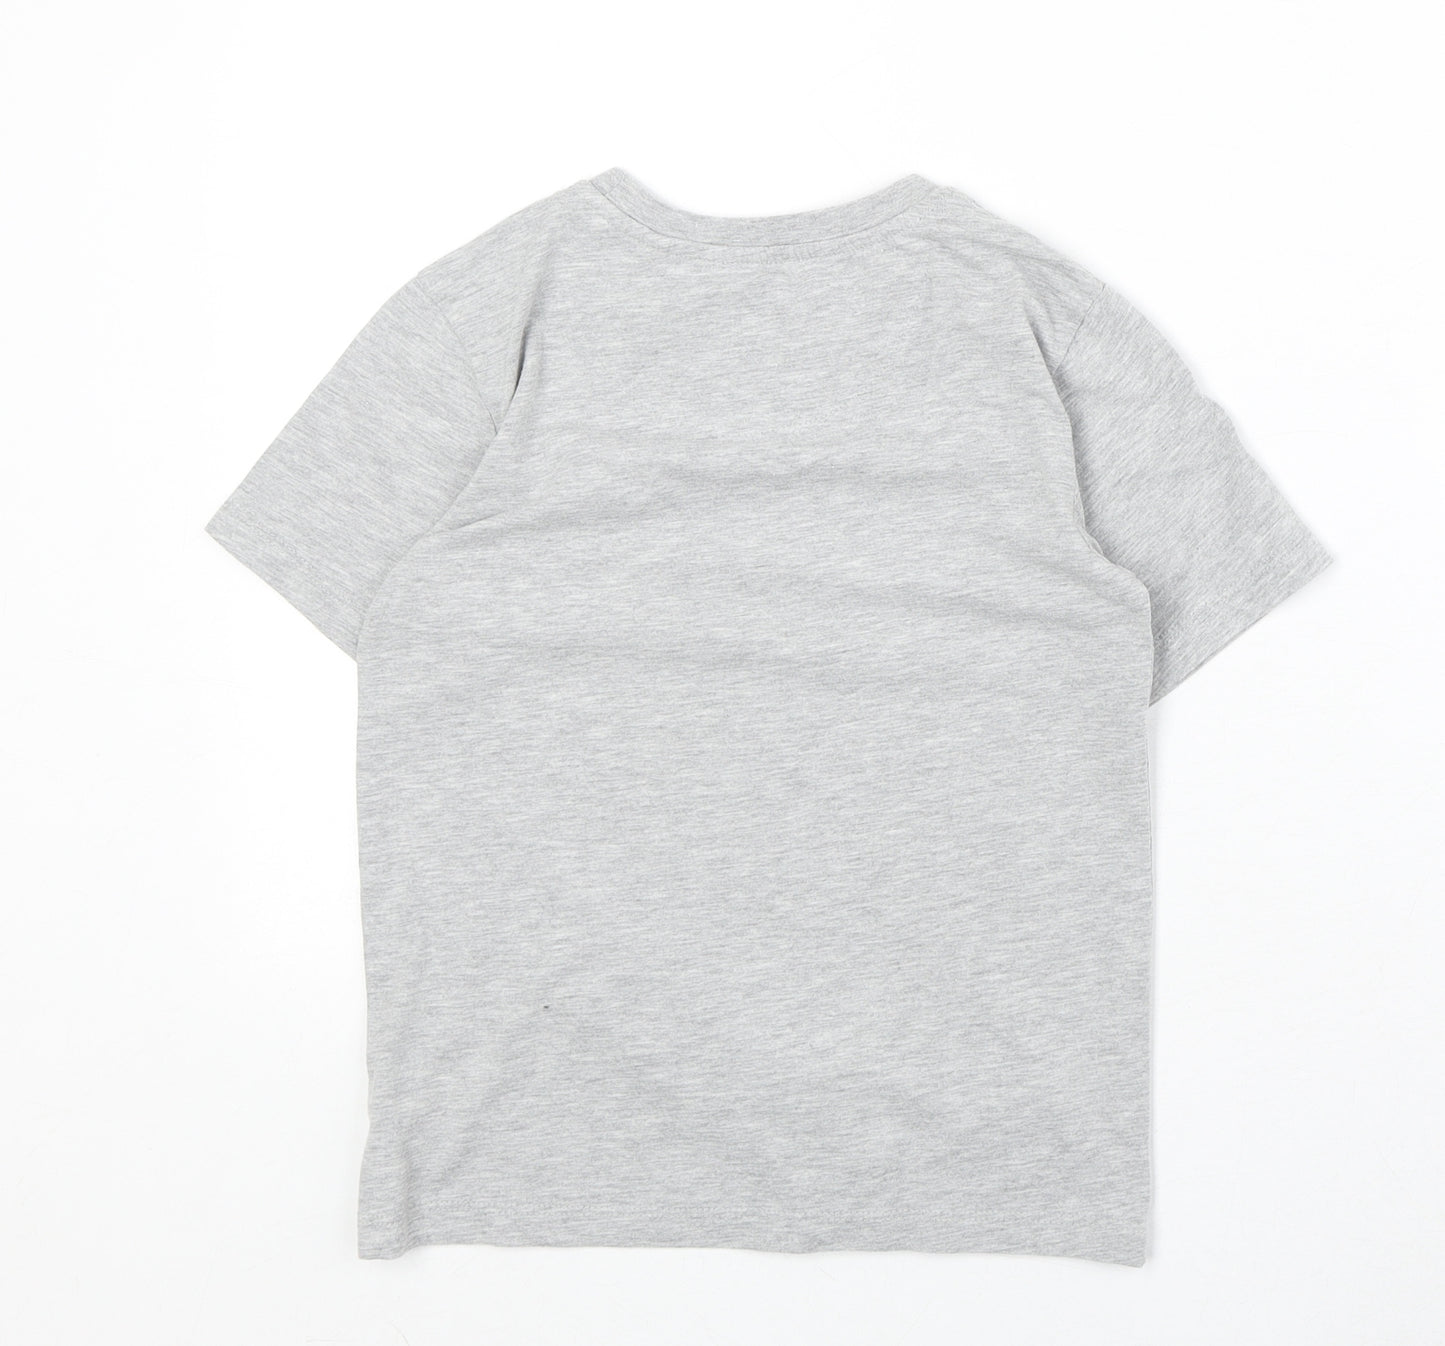 Debenhams Boys Grey Cotton Basic T-Shirt Size 7-8 Years Round Neck Pullover